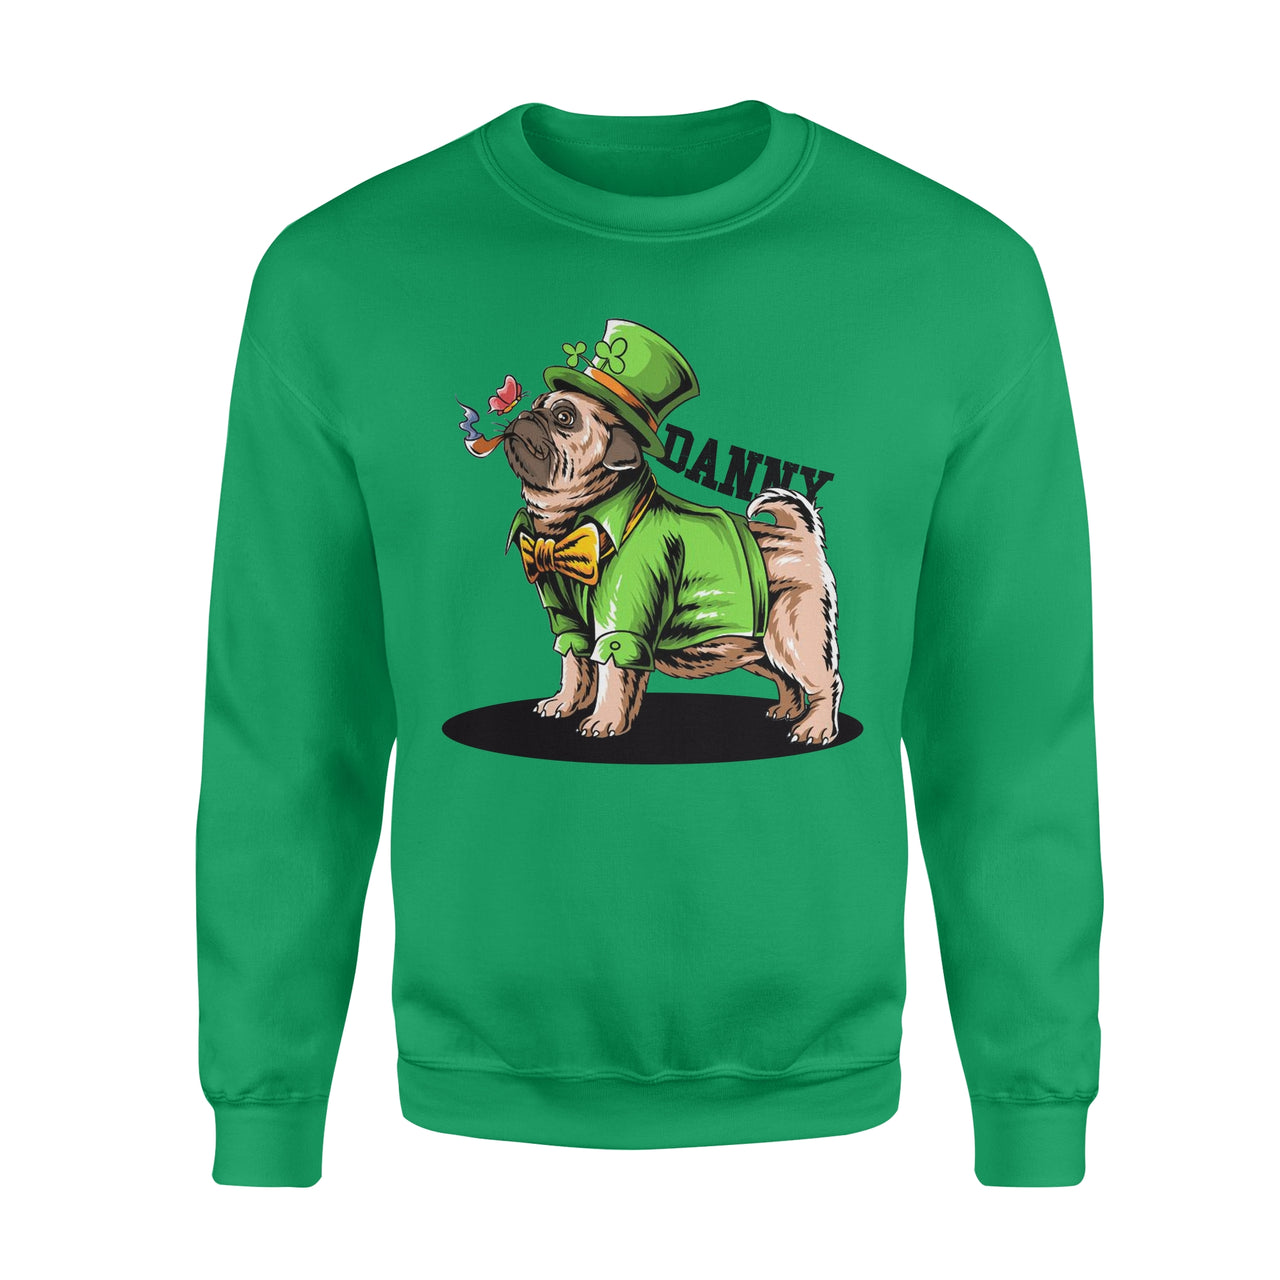 Personalized St. Patrick Gift Idea - Cool Bulldog Is Smoking - Standard Crew Neck Sweatshirt